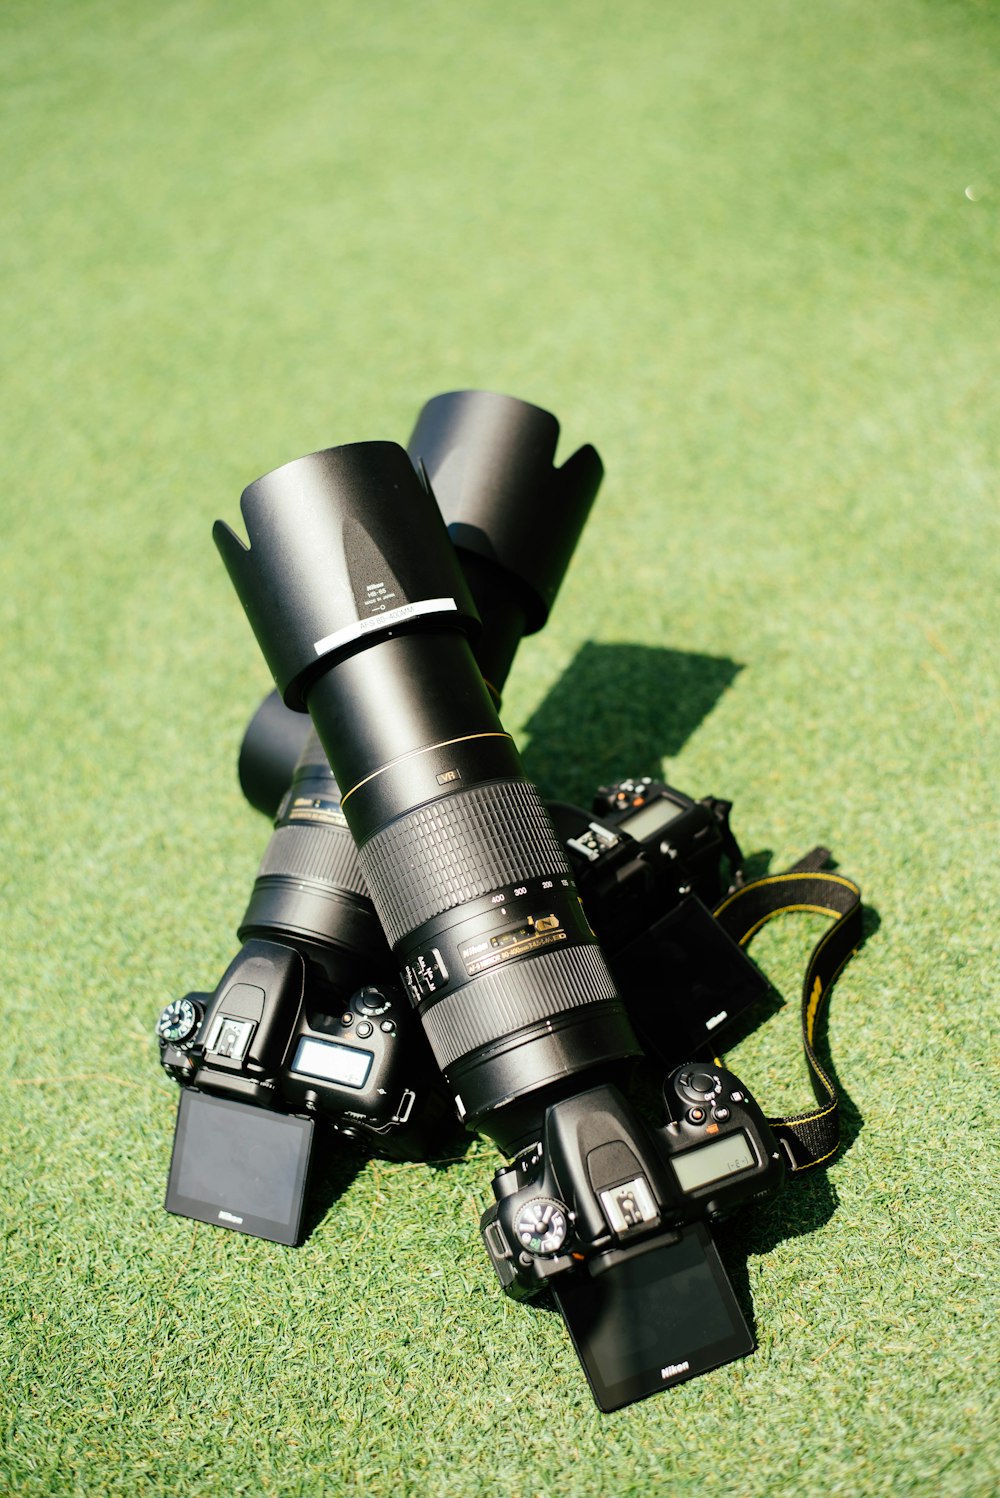 due fotocamere DSLR Nikon nere su erba verde